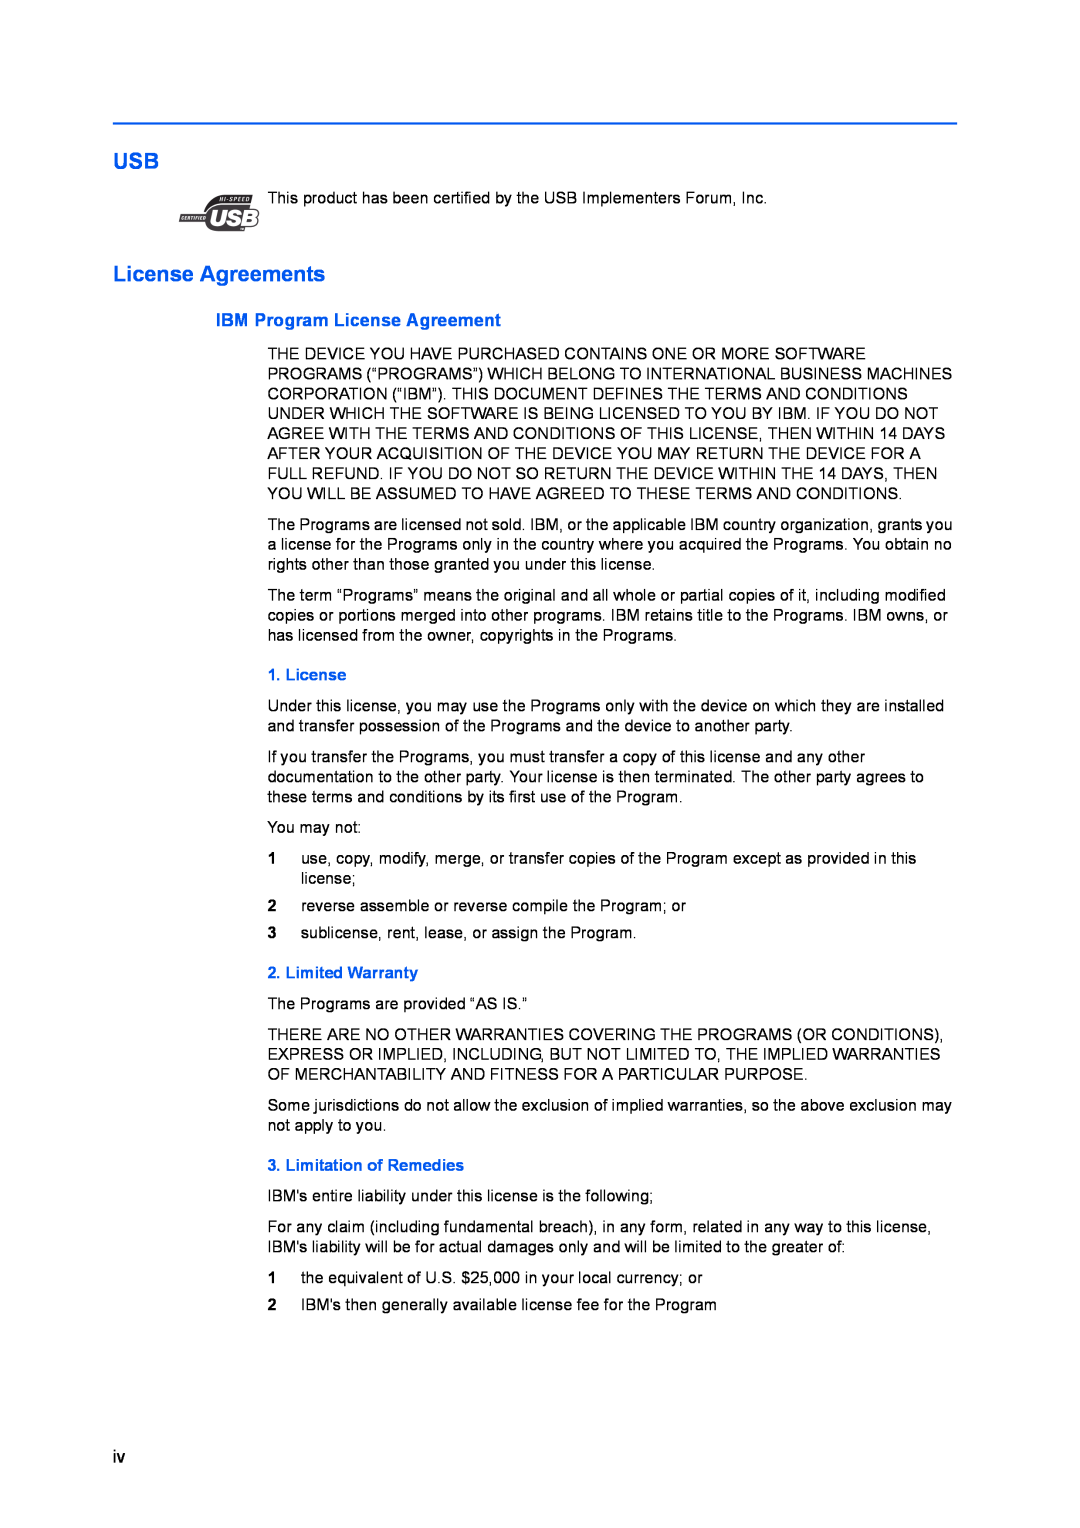 Kyocera FS-C8100DN manual License Agreements, IBM Program License Agreement, Limited Warranty, Limitation of Remedies 